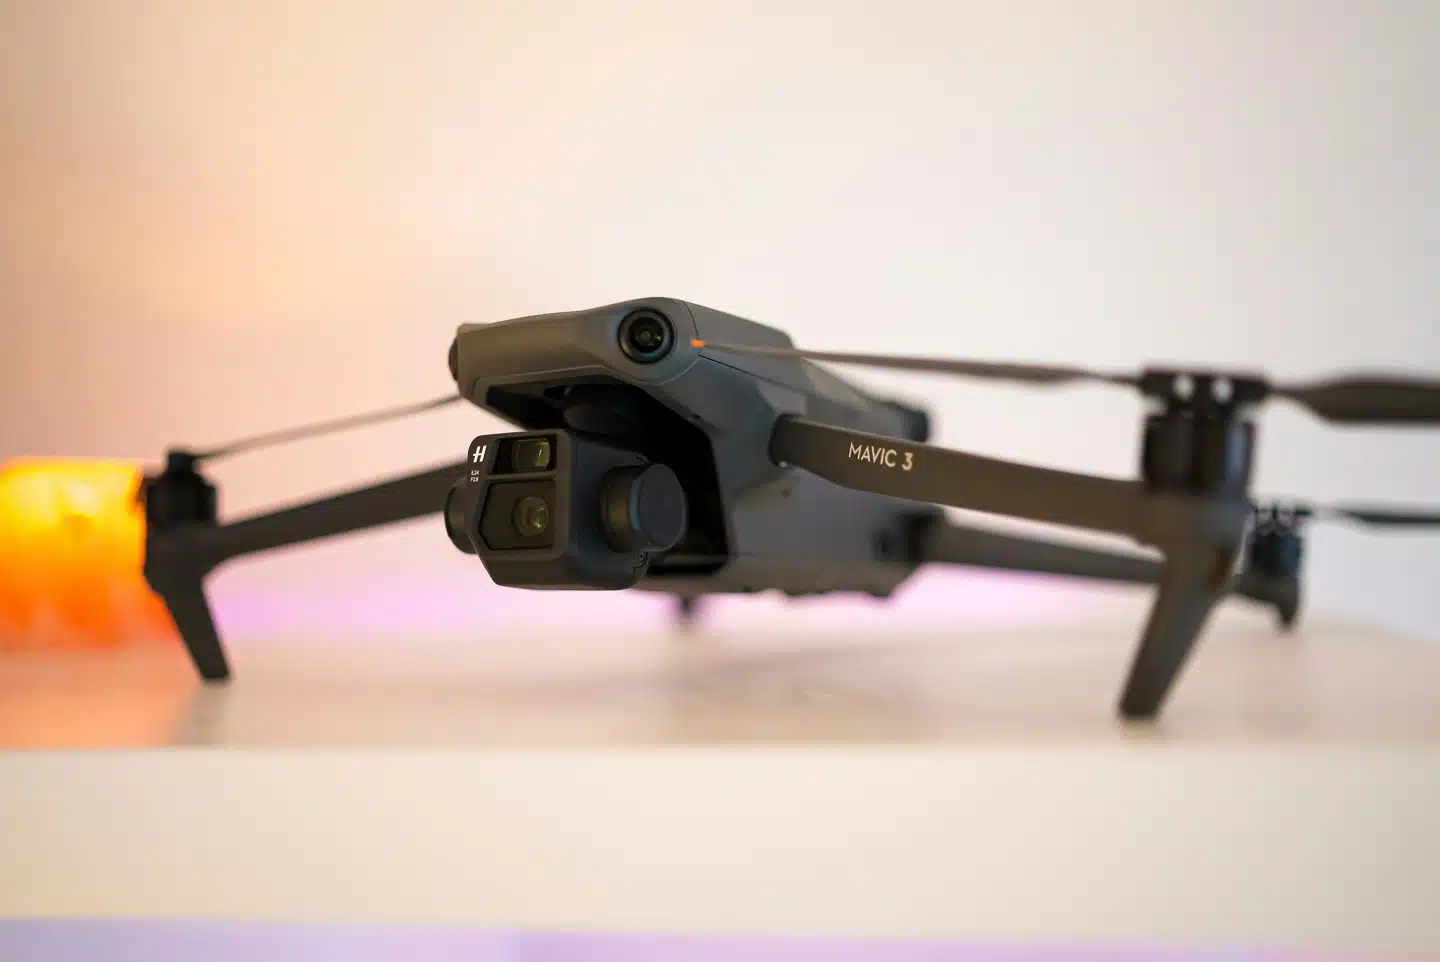 DJI Mavic 3 drone on a table